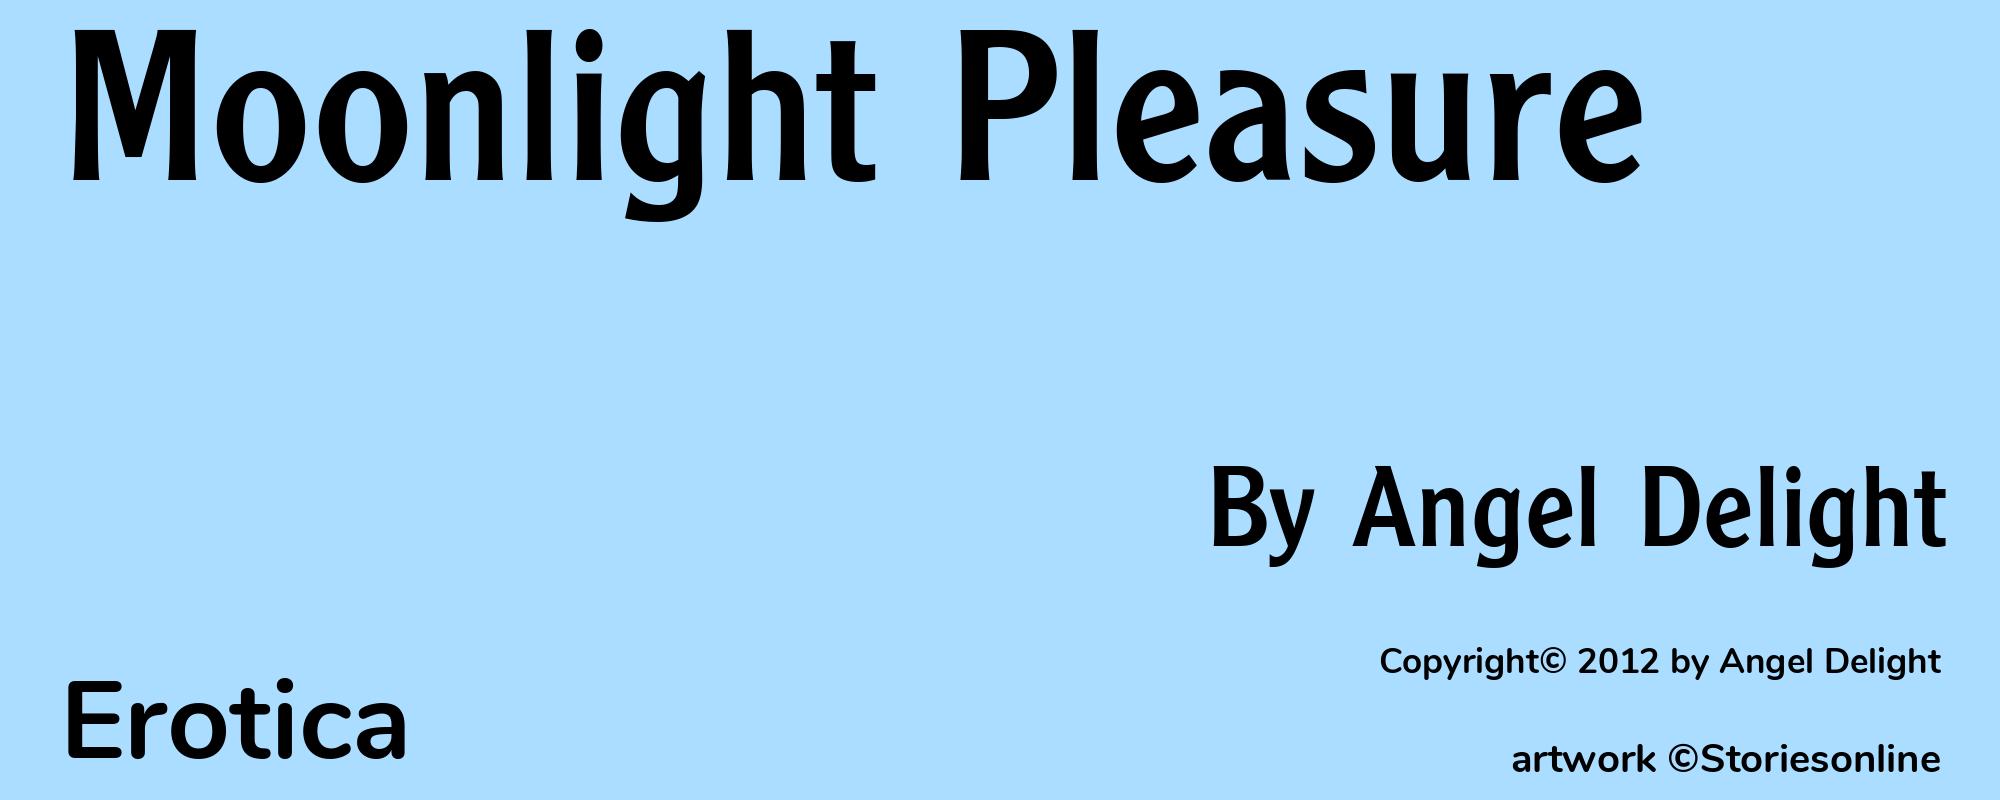 Moonlight Pleasure - Cover